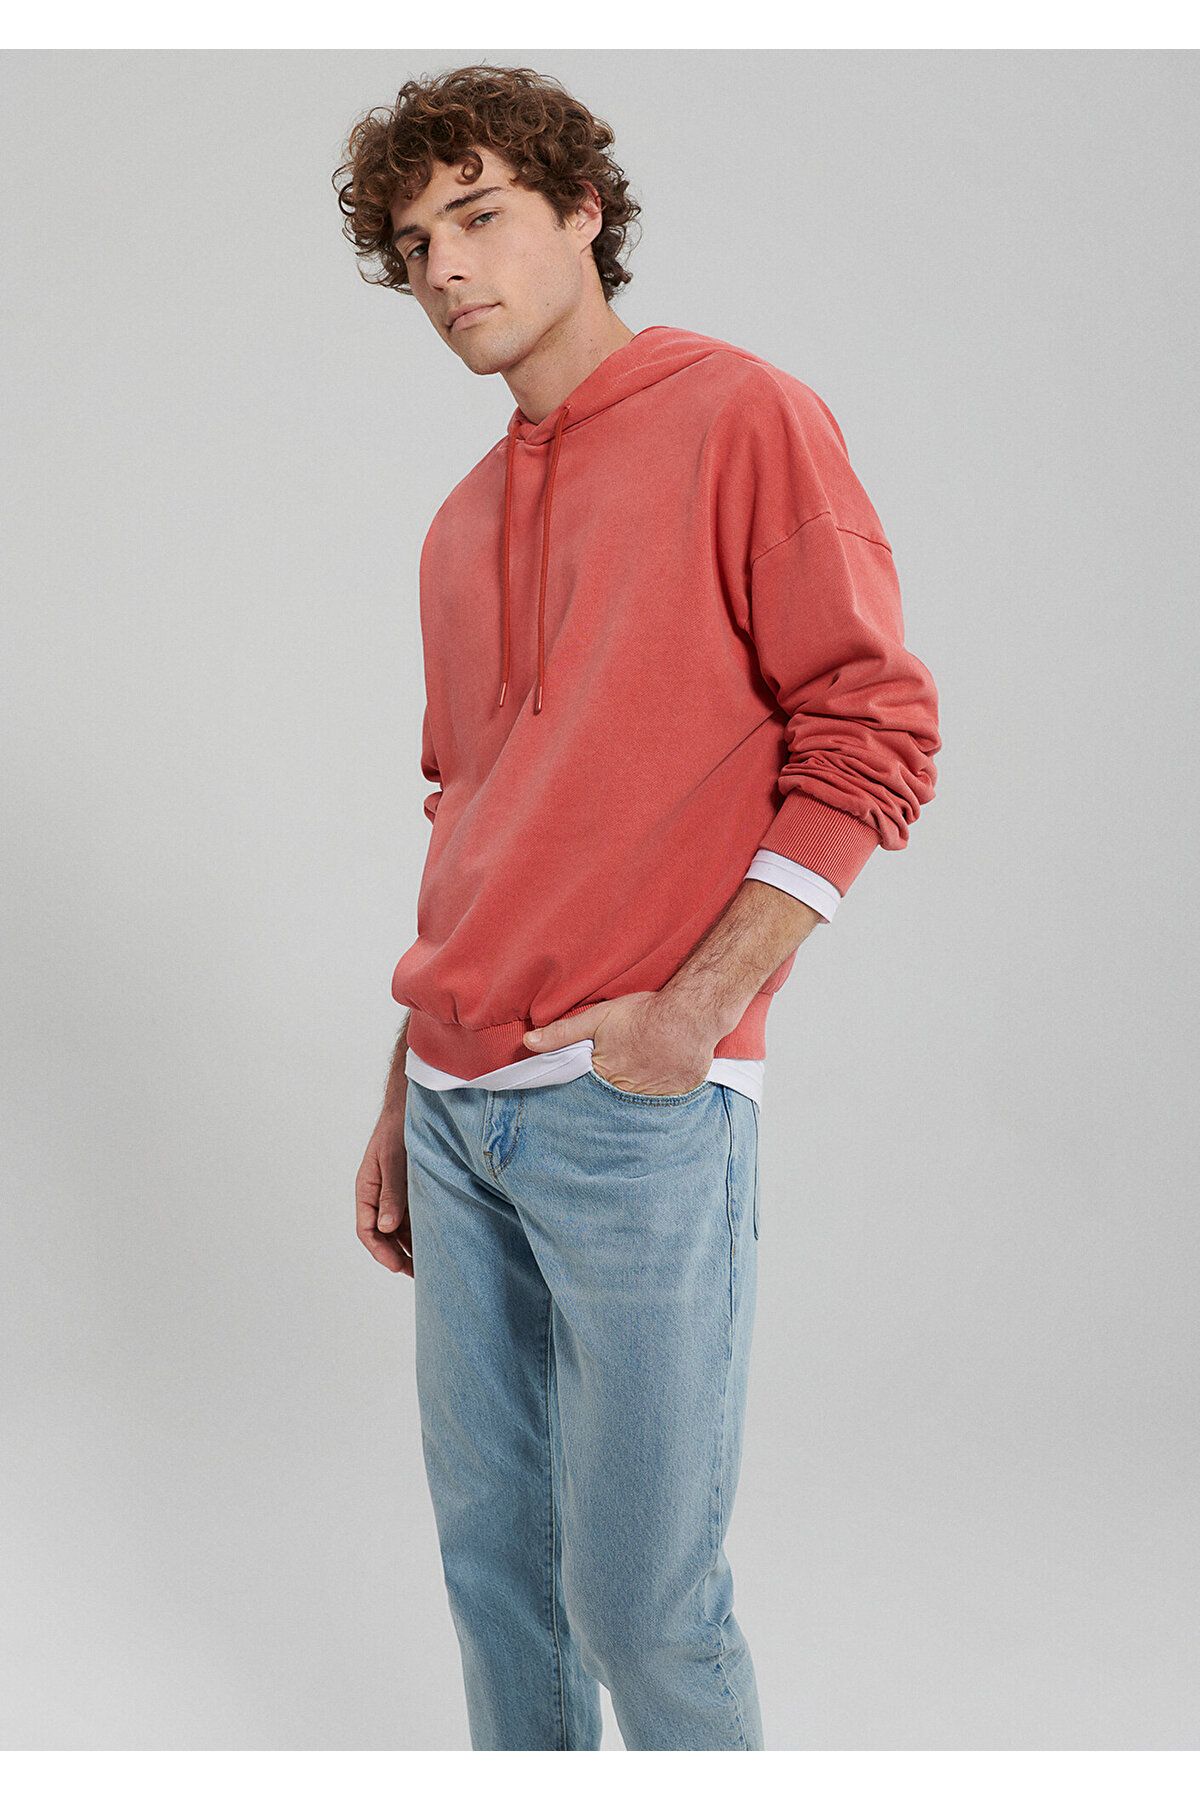 Mavi Kapüşonlu Kırmızı Sweatshirt 0S10098-85124